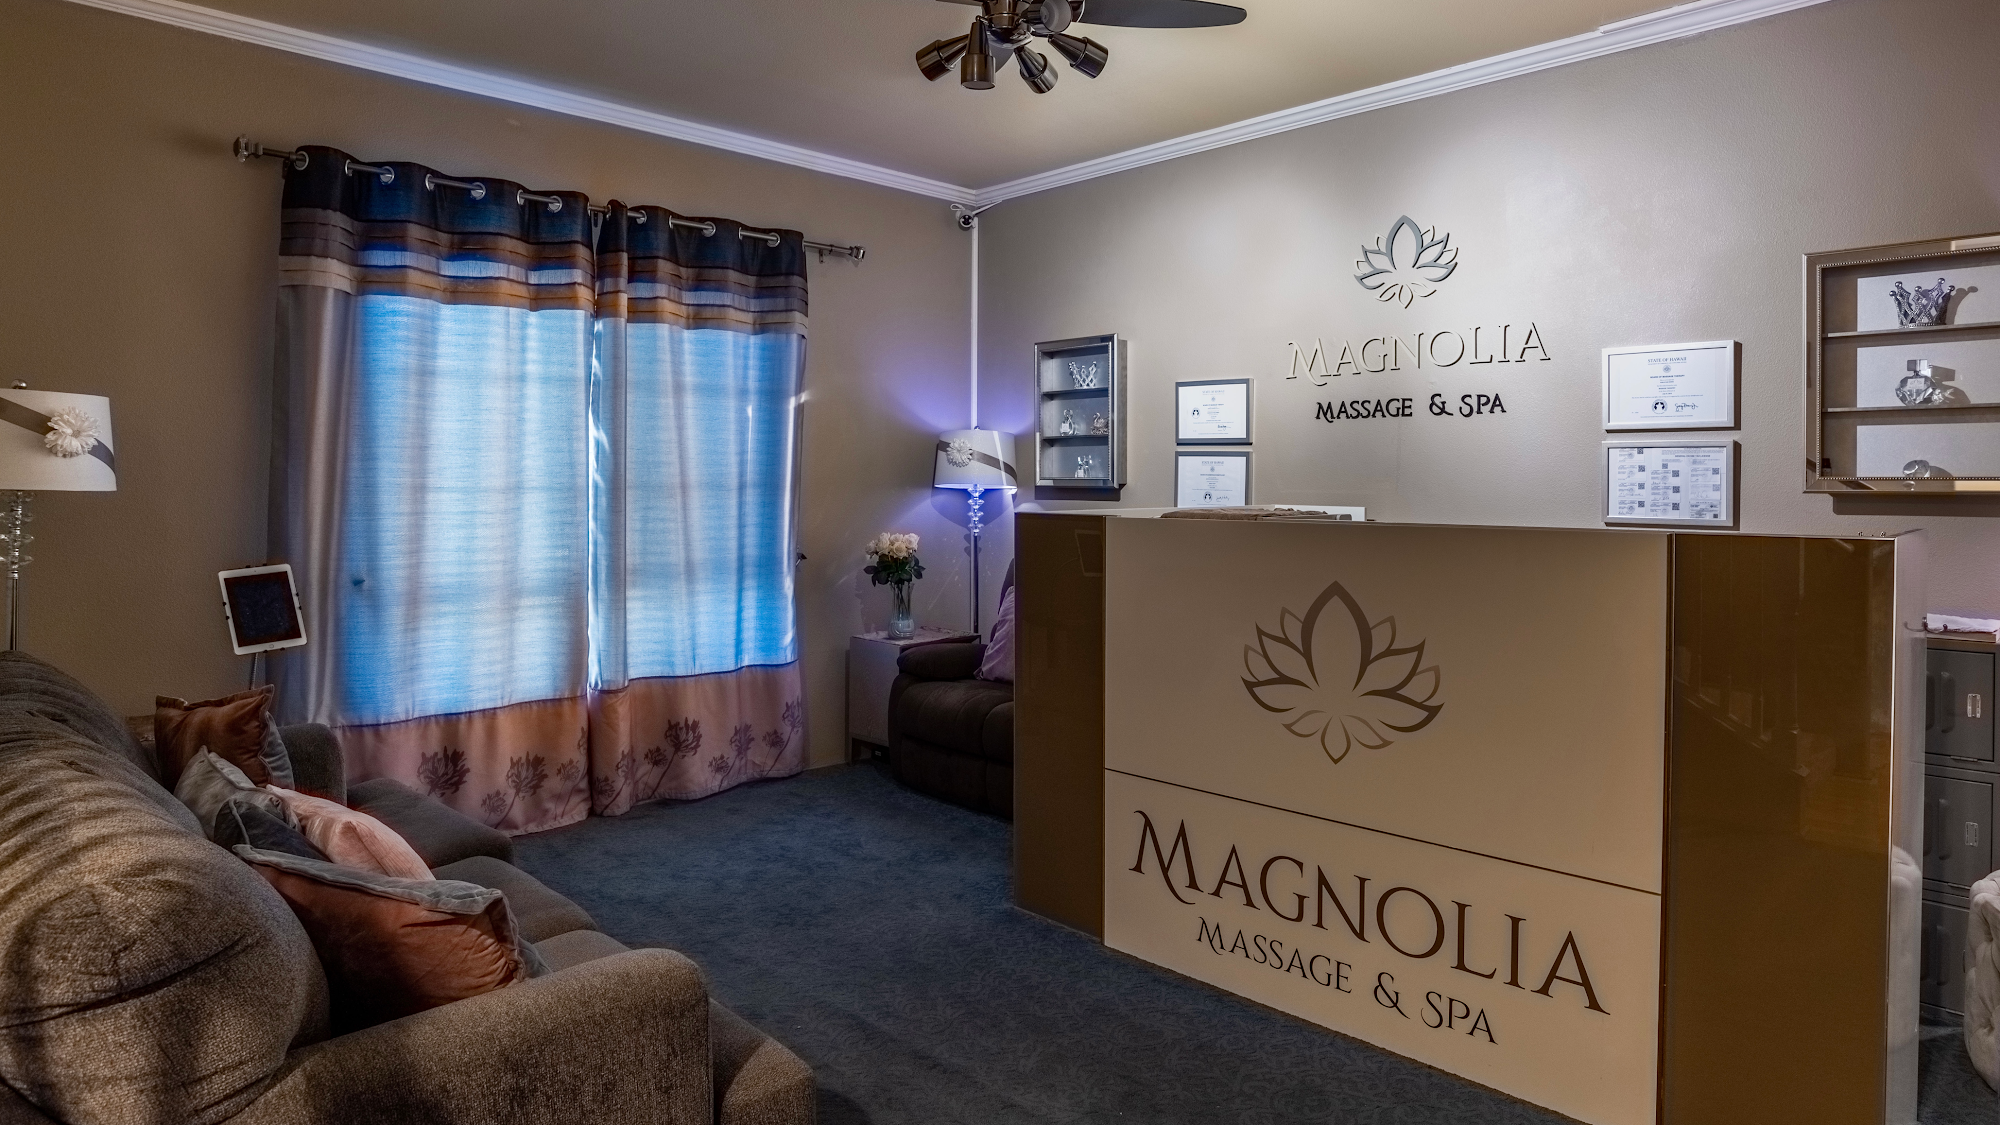 Magnolia Massage & Spa